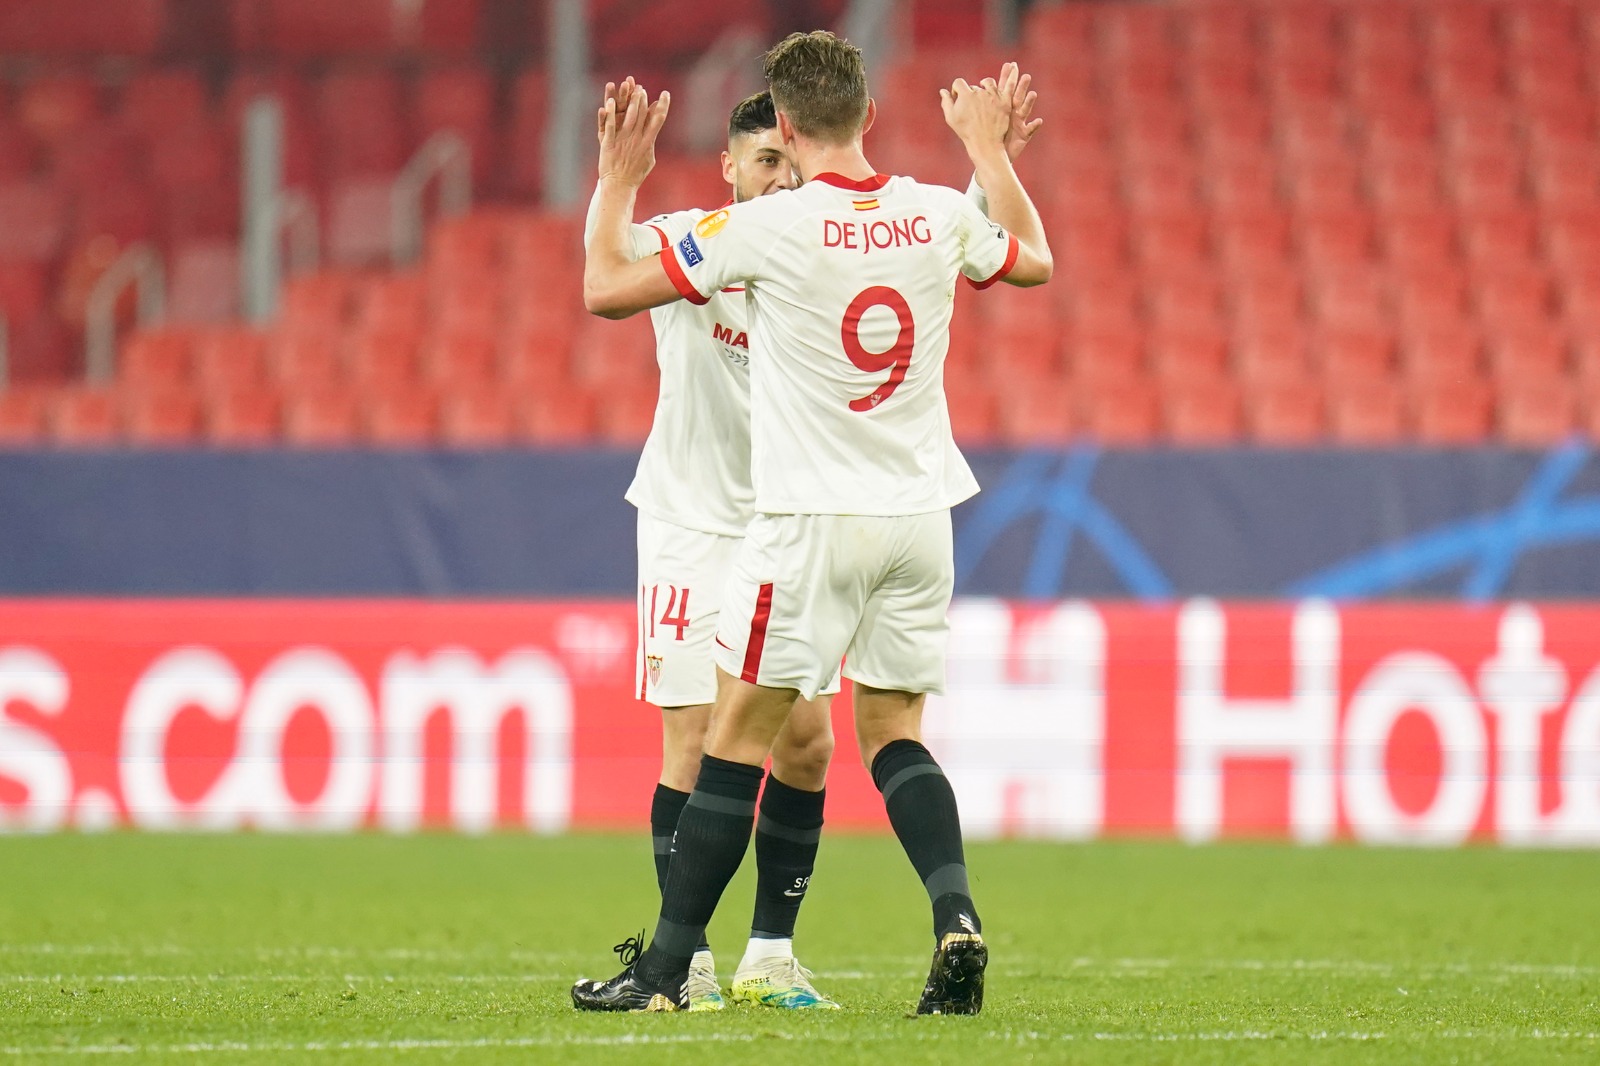 Óscar and De Jong celebrate Sevilla FC's second goal